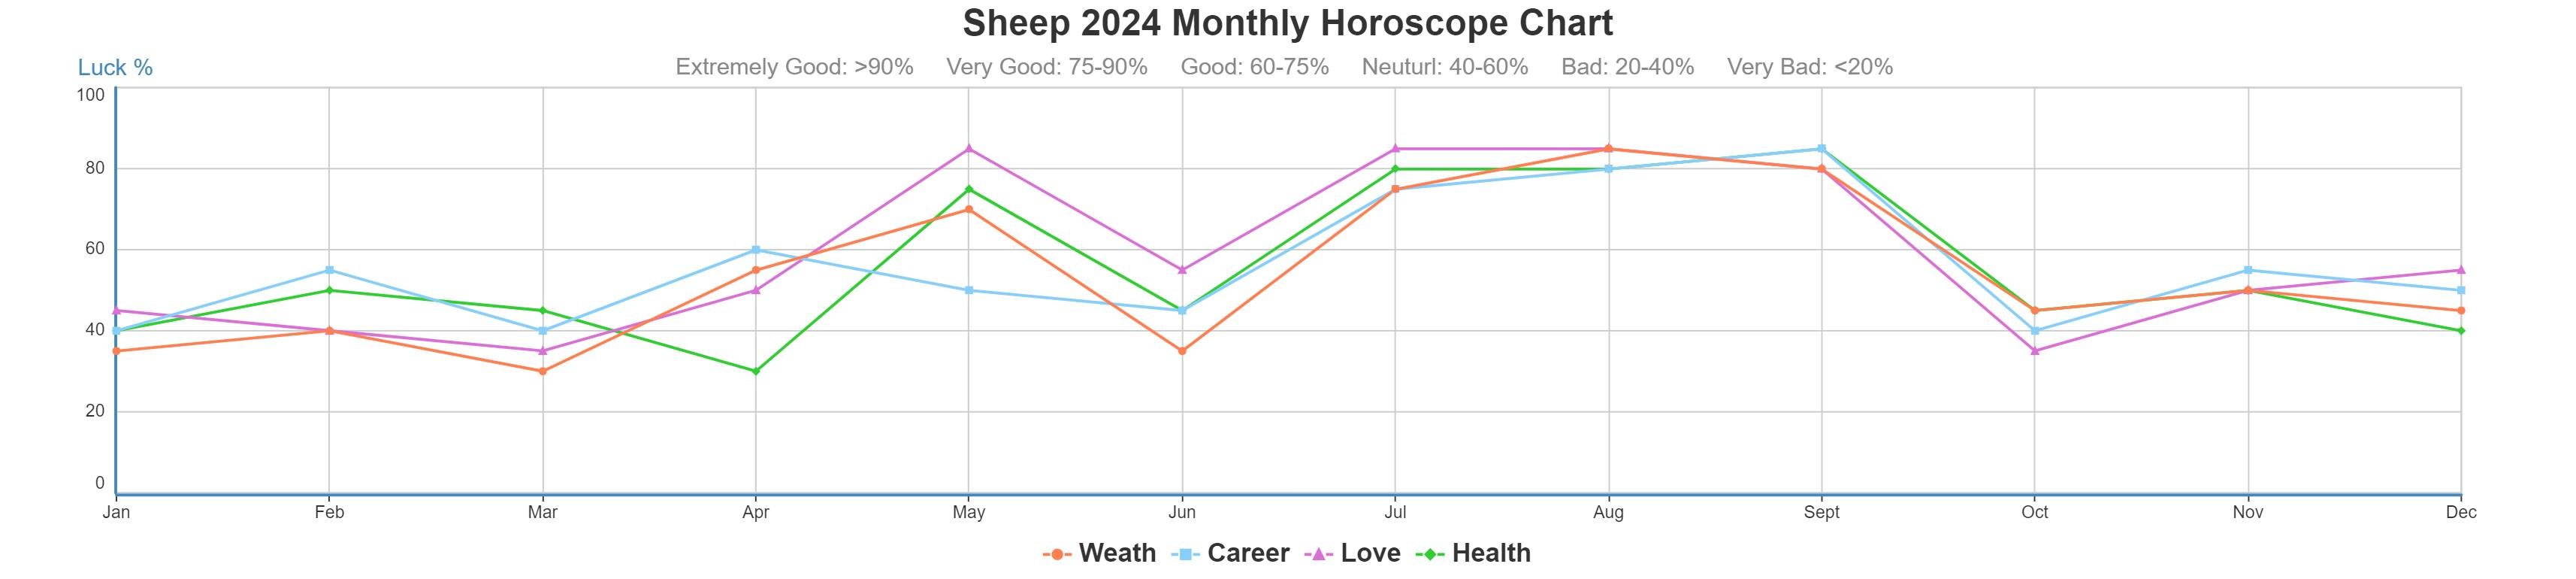 Sheep 2024 monthly horoscope